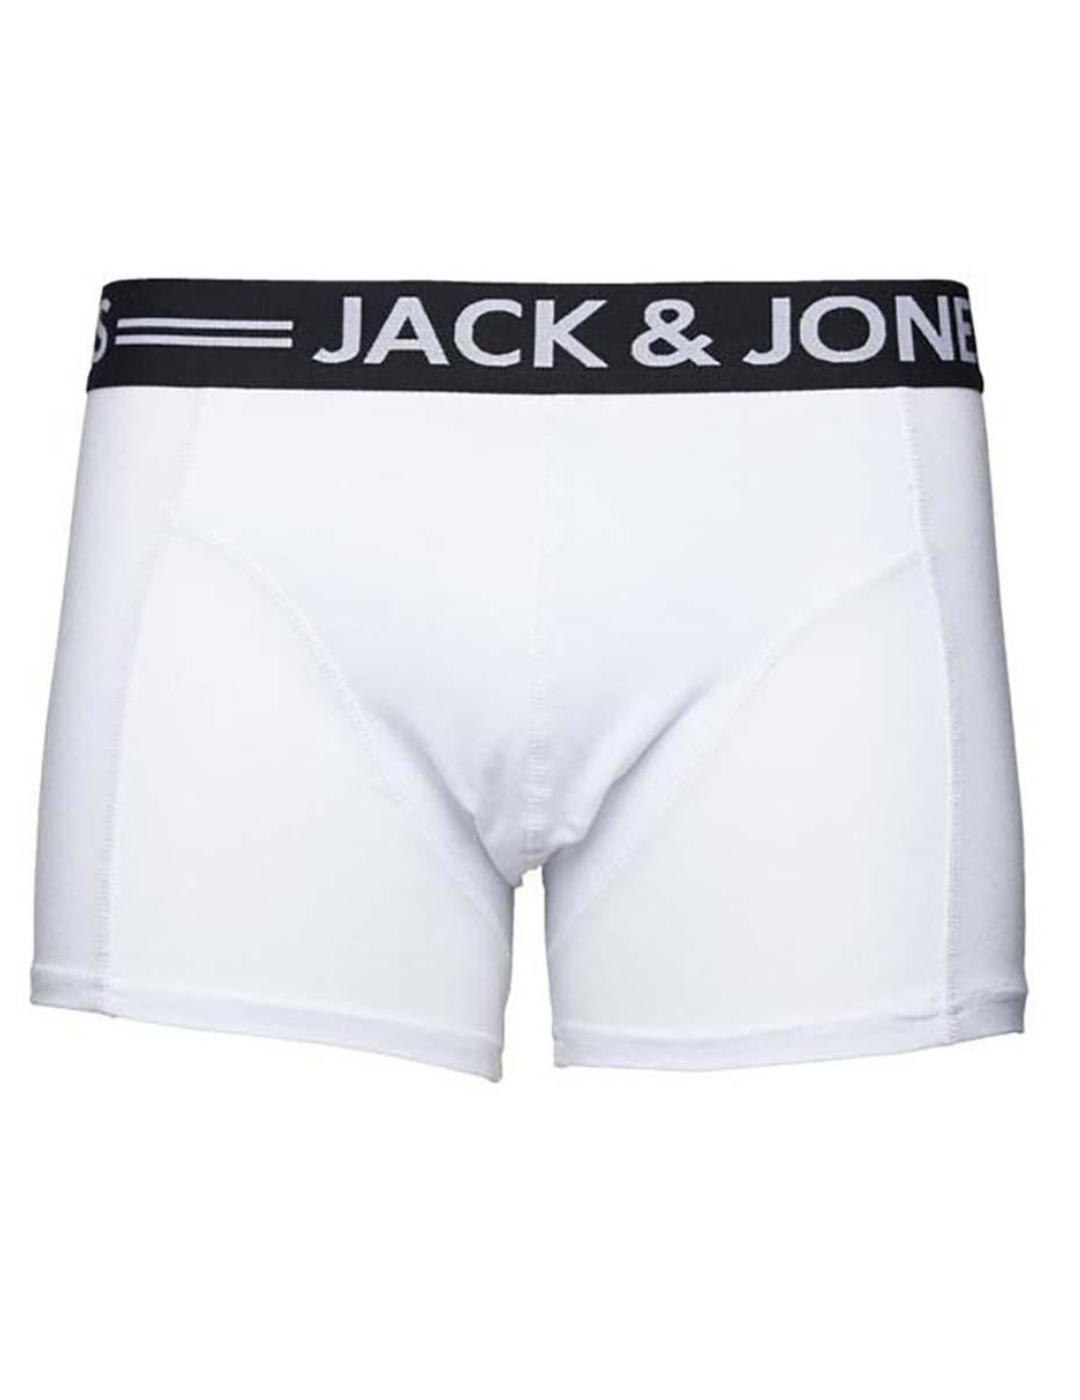 Intimo Jack&Jones Trunks Noos blanco de hombre -j